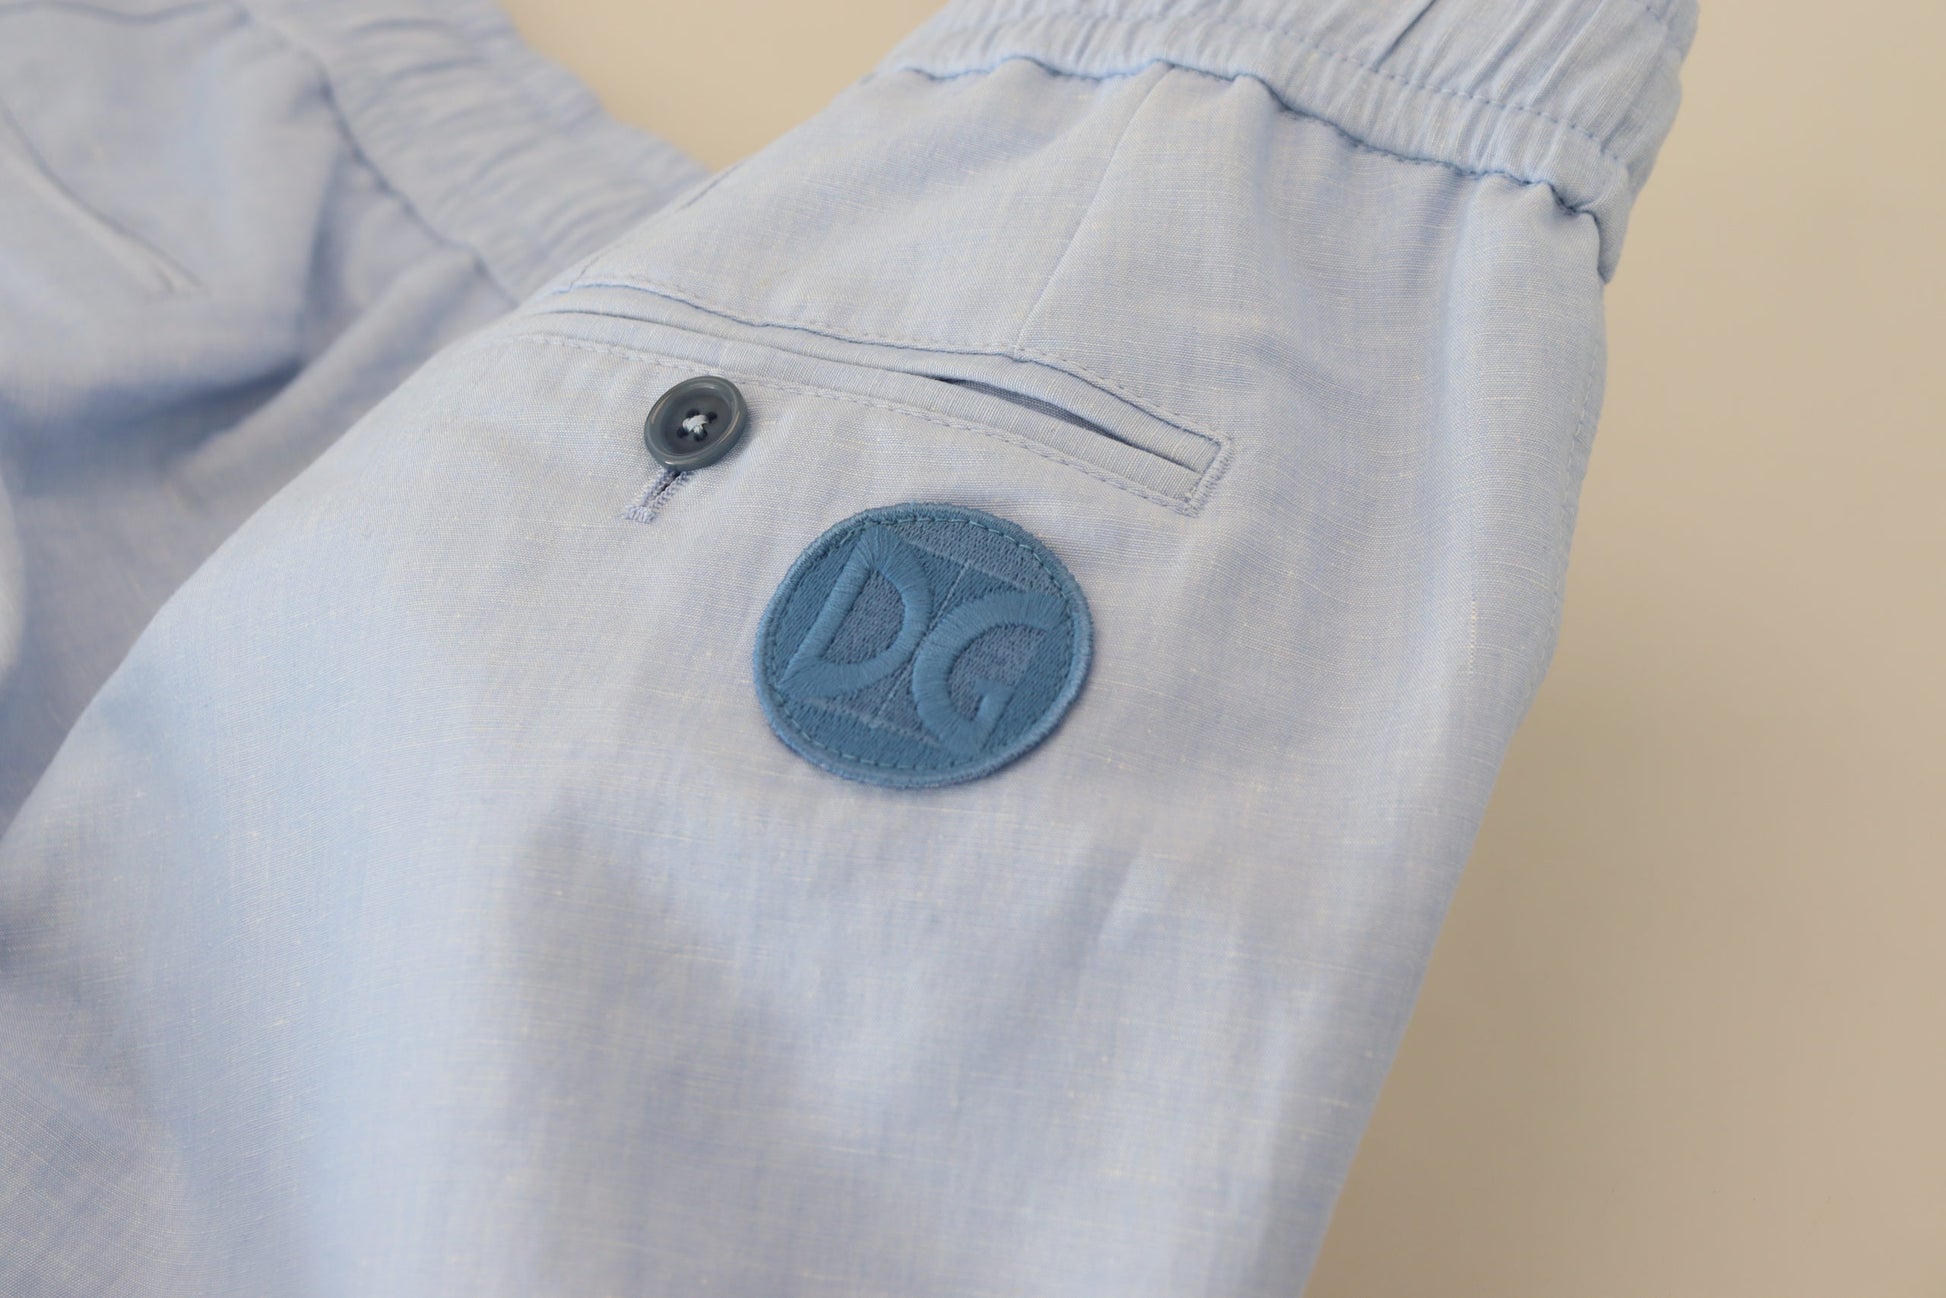 Elegant Light Blue Linen-Cotton Summer Shorts